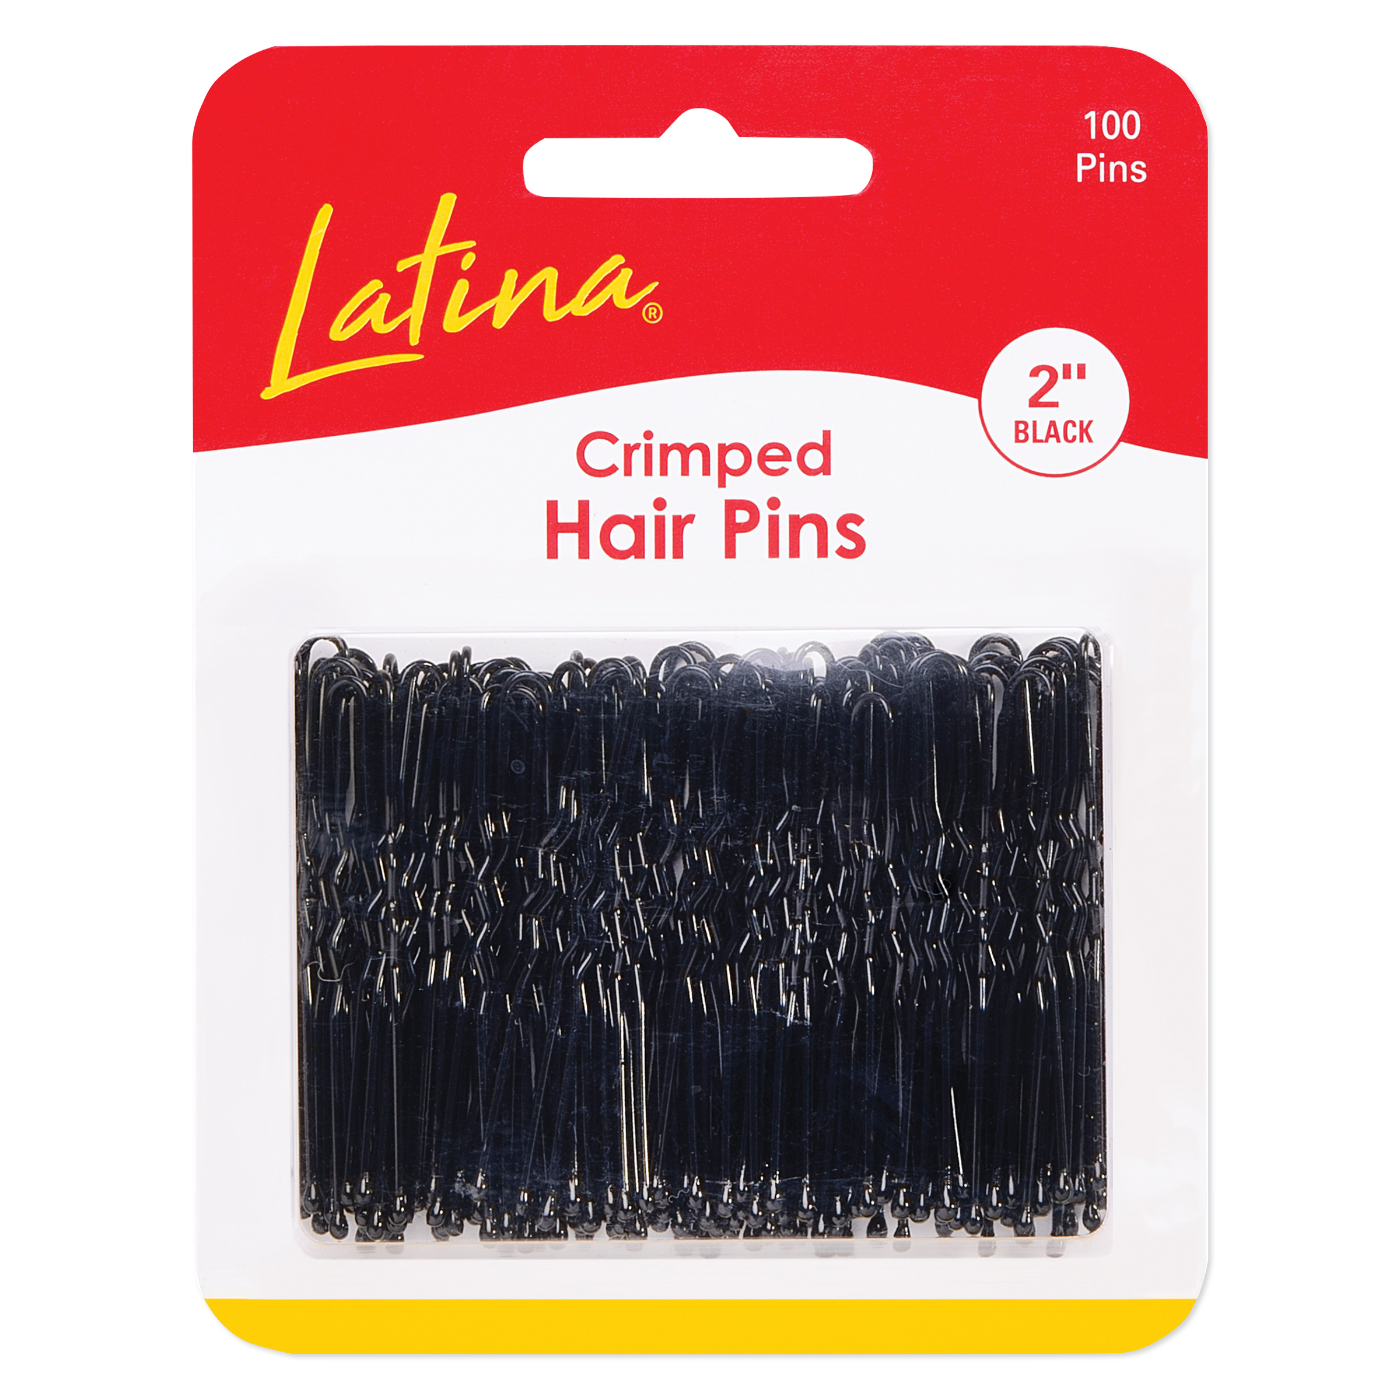 Hair Pins, Black, 60 Pack - 2"